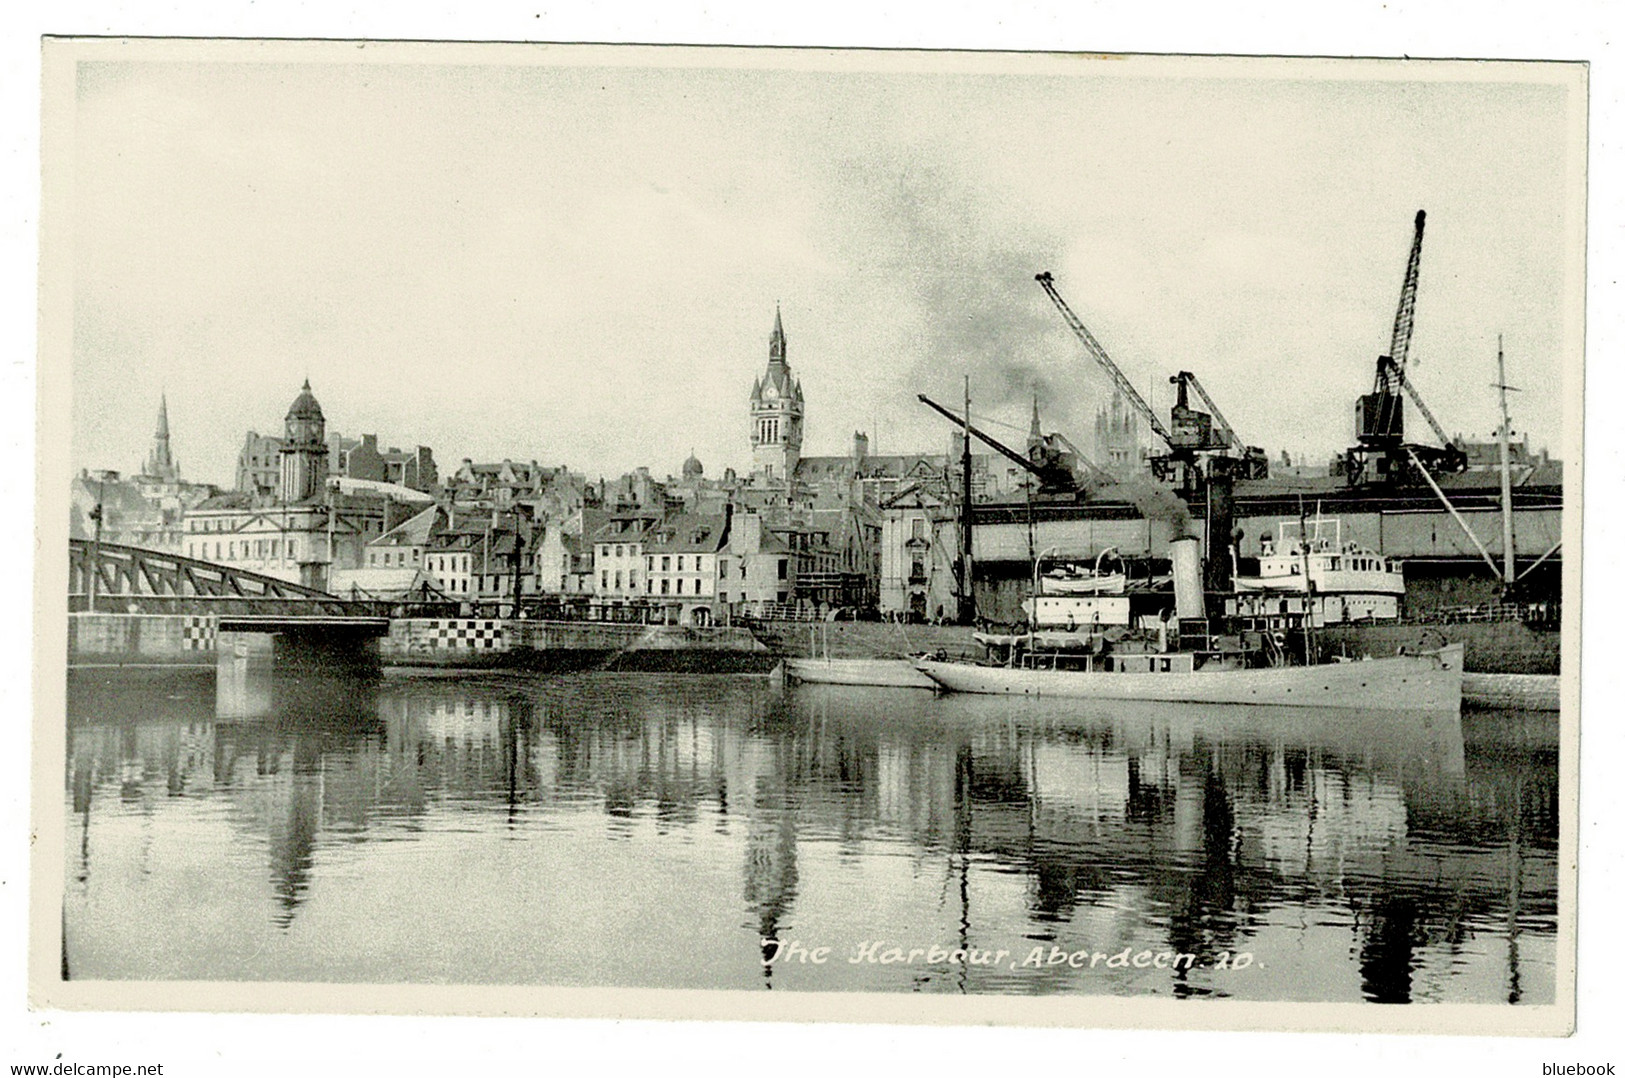 Ref 1525 - Postcard - Steamer & Cranes Aberdeen Harbour - Scotland - Aberdeenshire